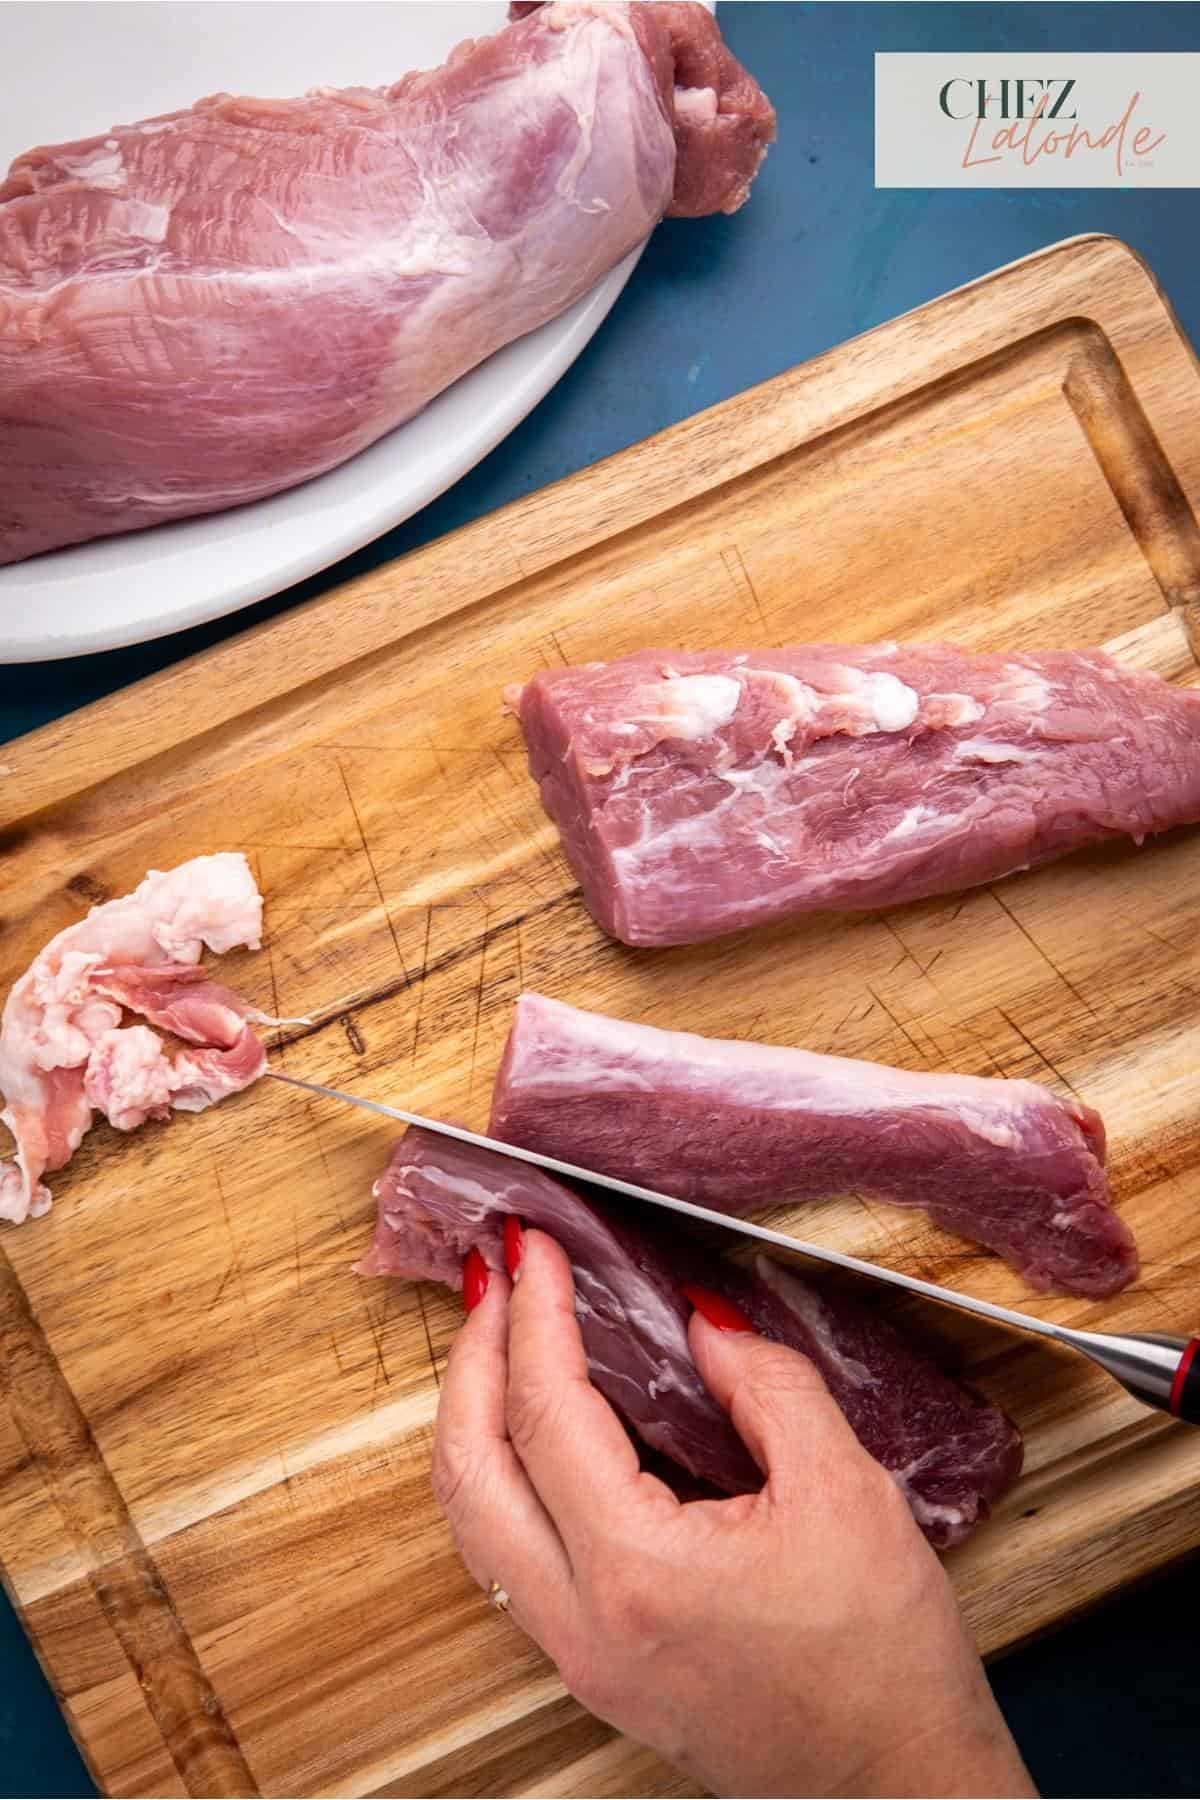 Slicing the pork tenderloin in half.